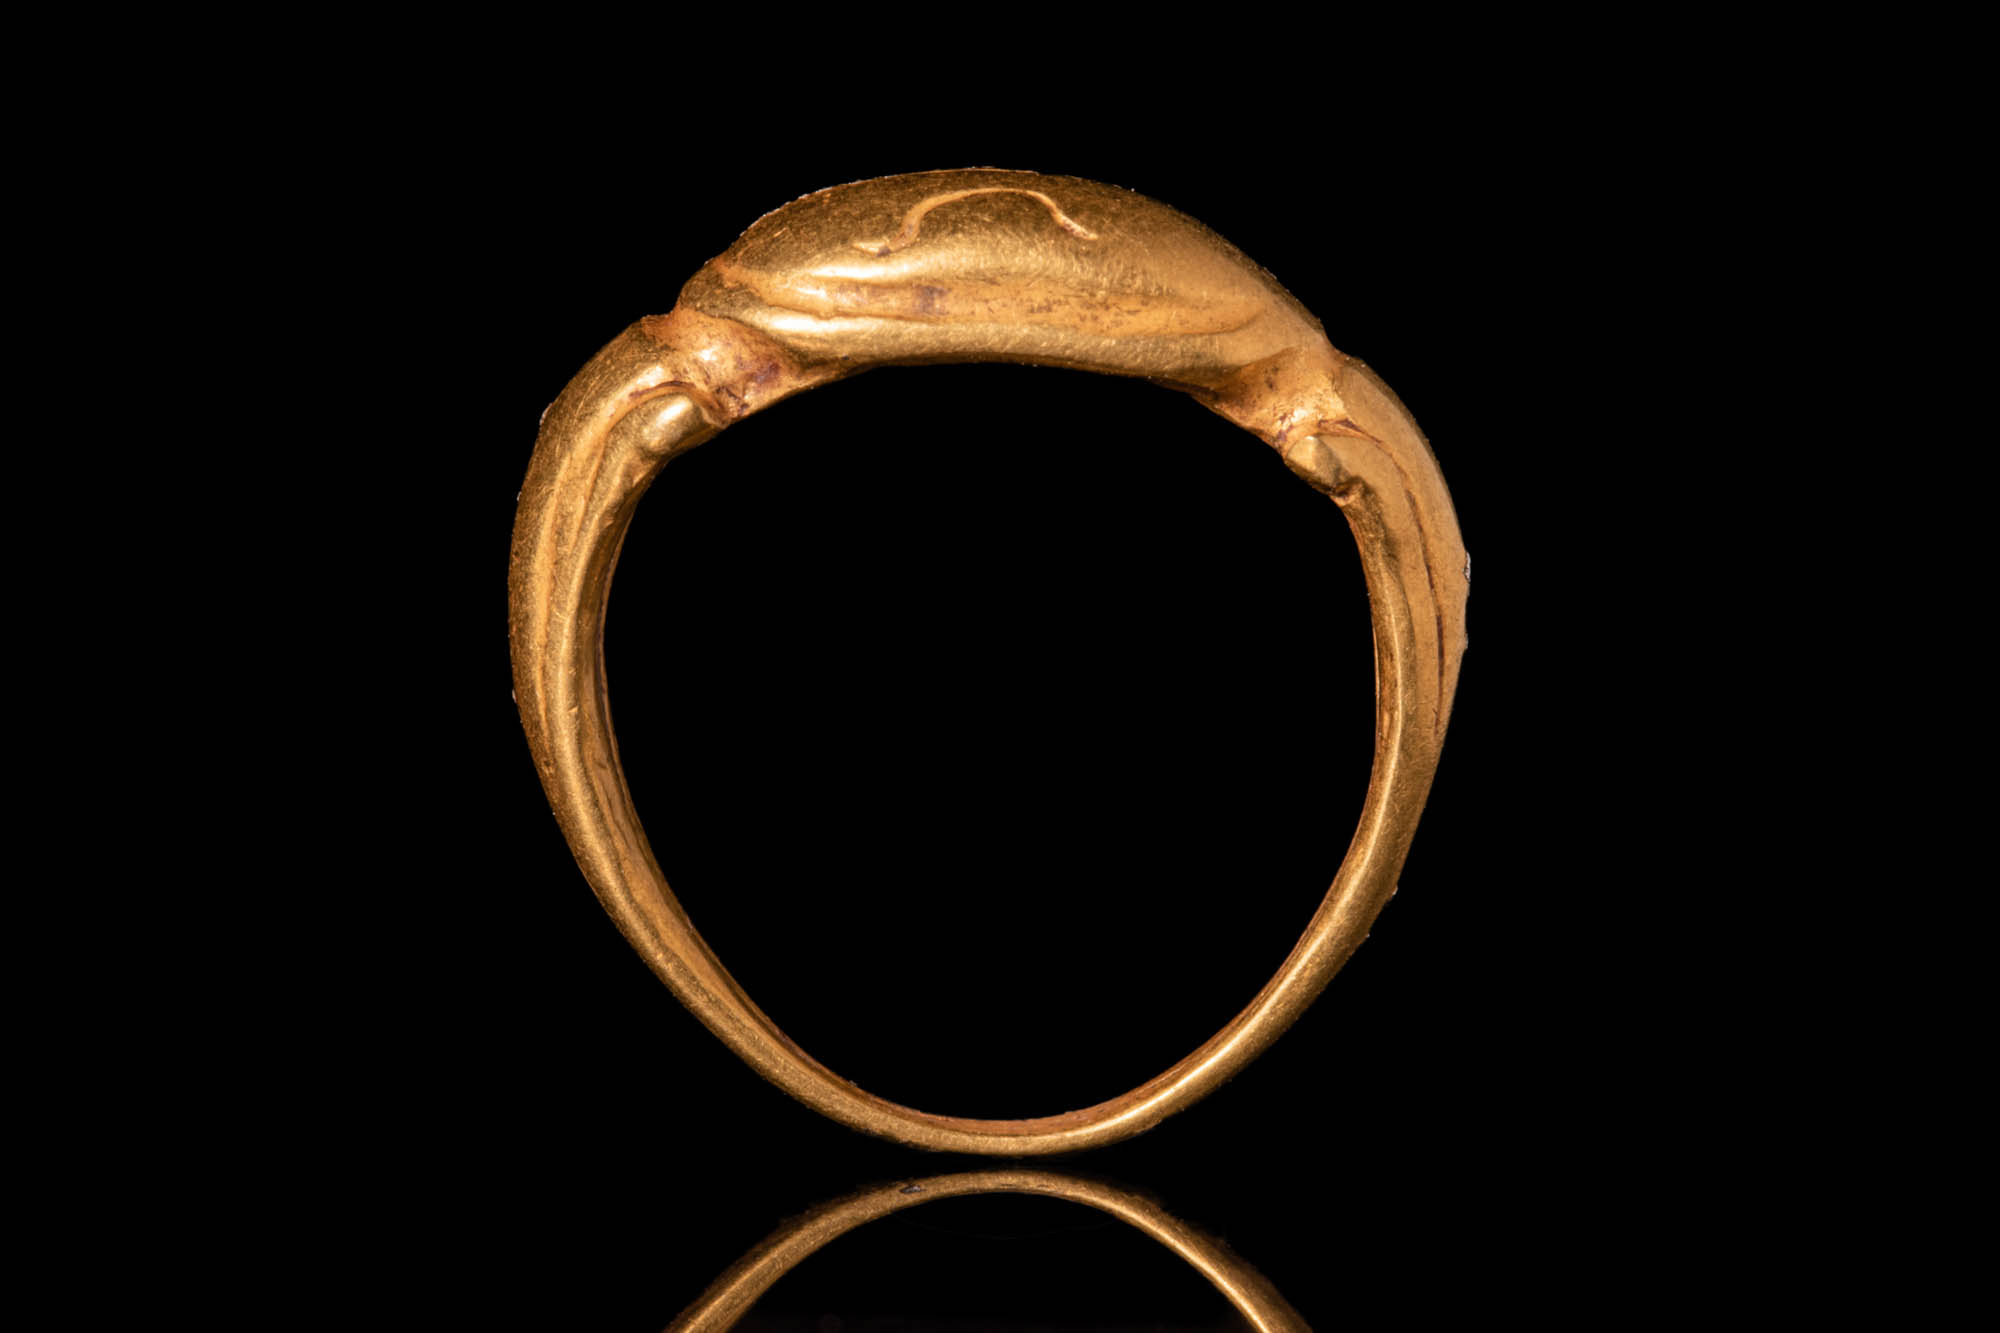 JAVANESE GOLD FINGER RING WITH SRI SYMBOL - Image 5 of 5